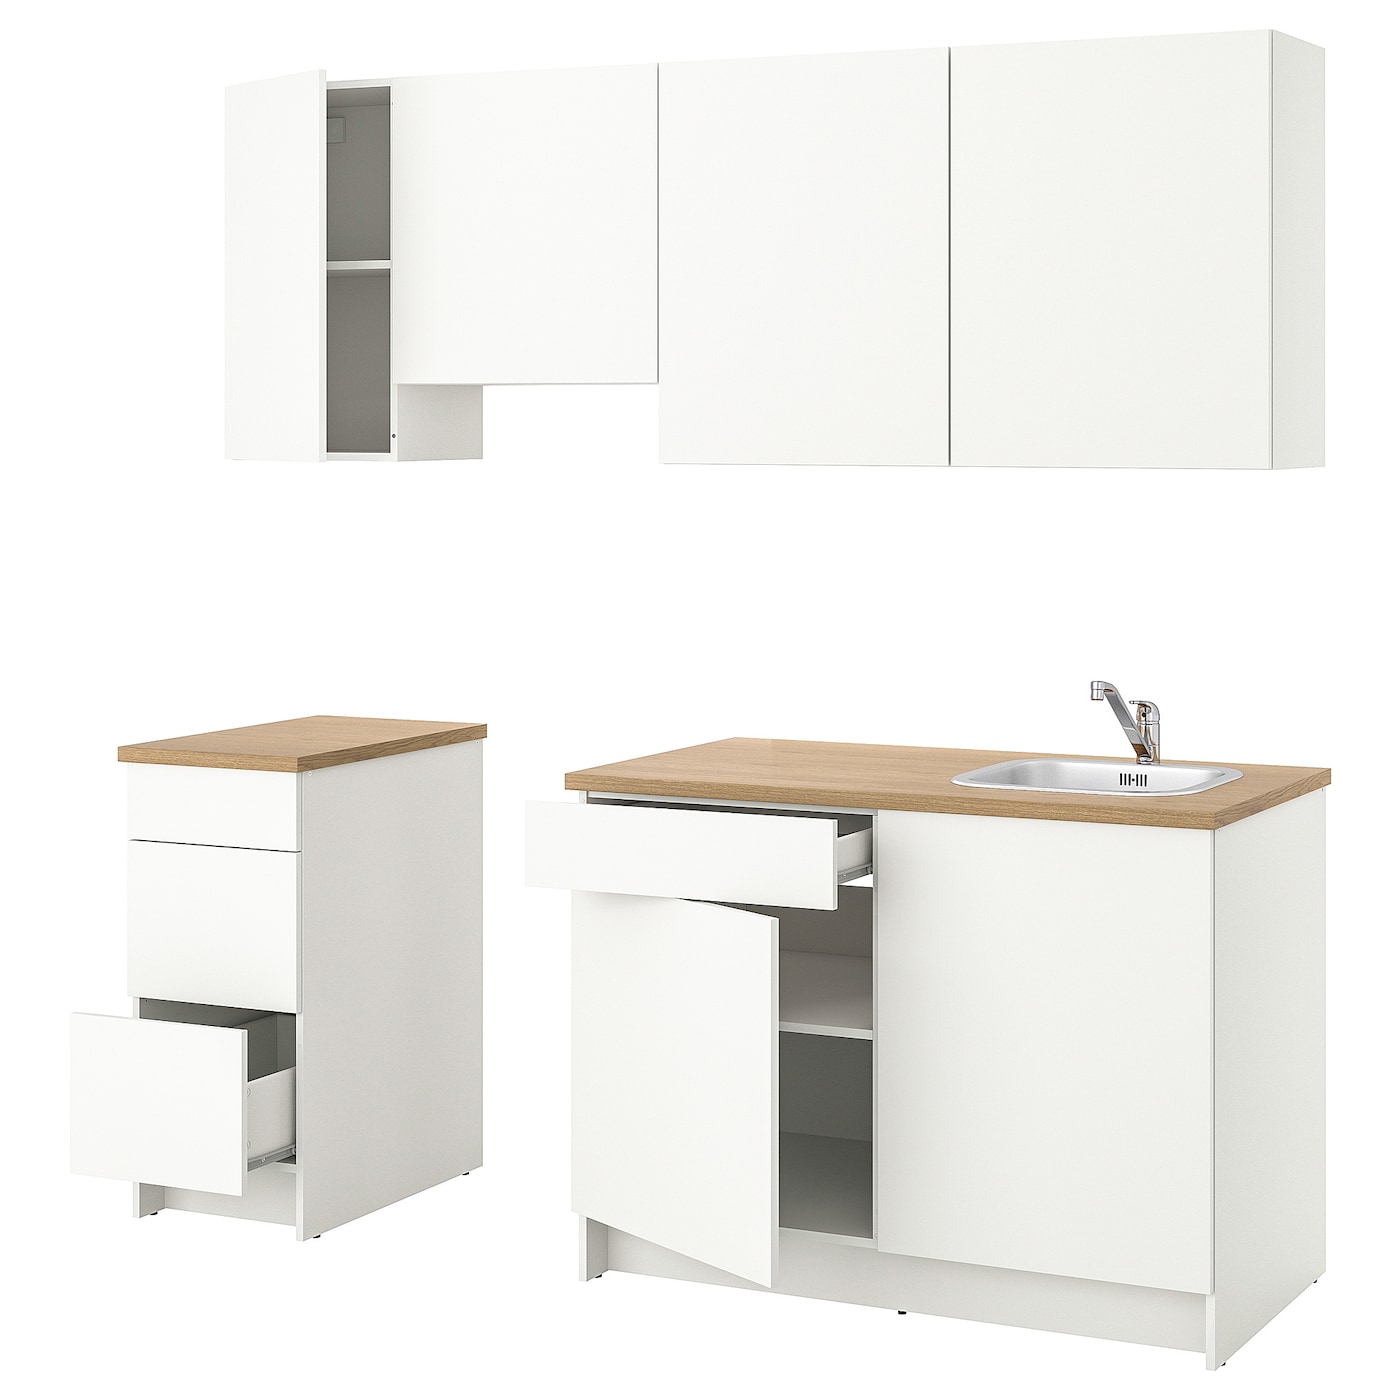 Кухонная комбинация для хранения - KNOXHULT IKEA/ КНОКСХУЛЬТ ИКЕА, 220х61х220 см, белый/бежевый